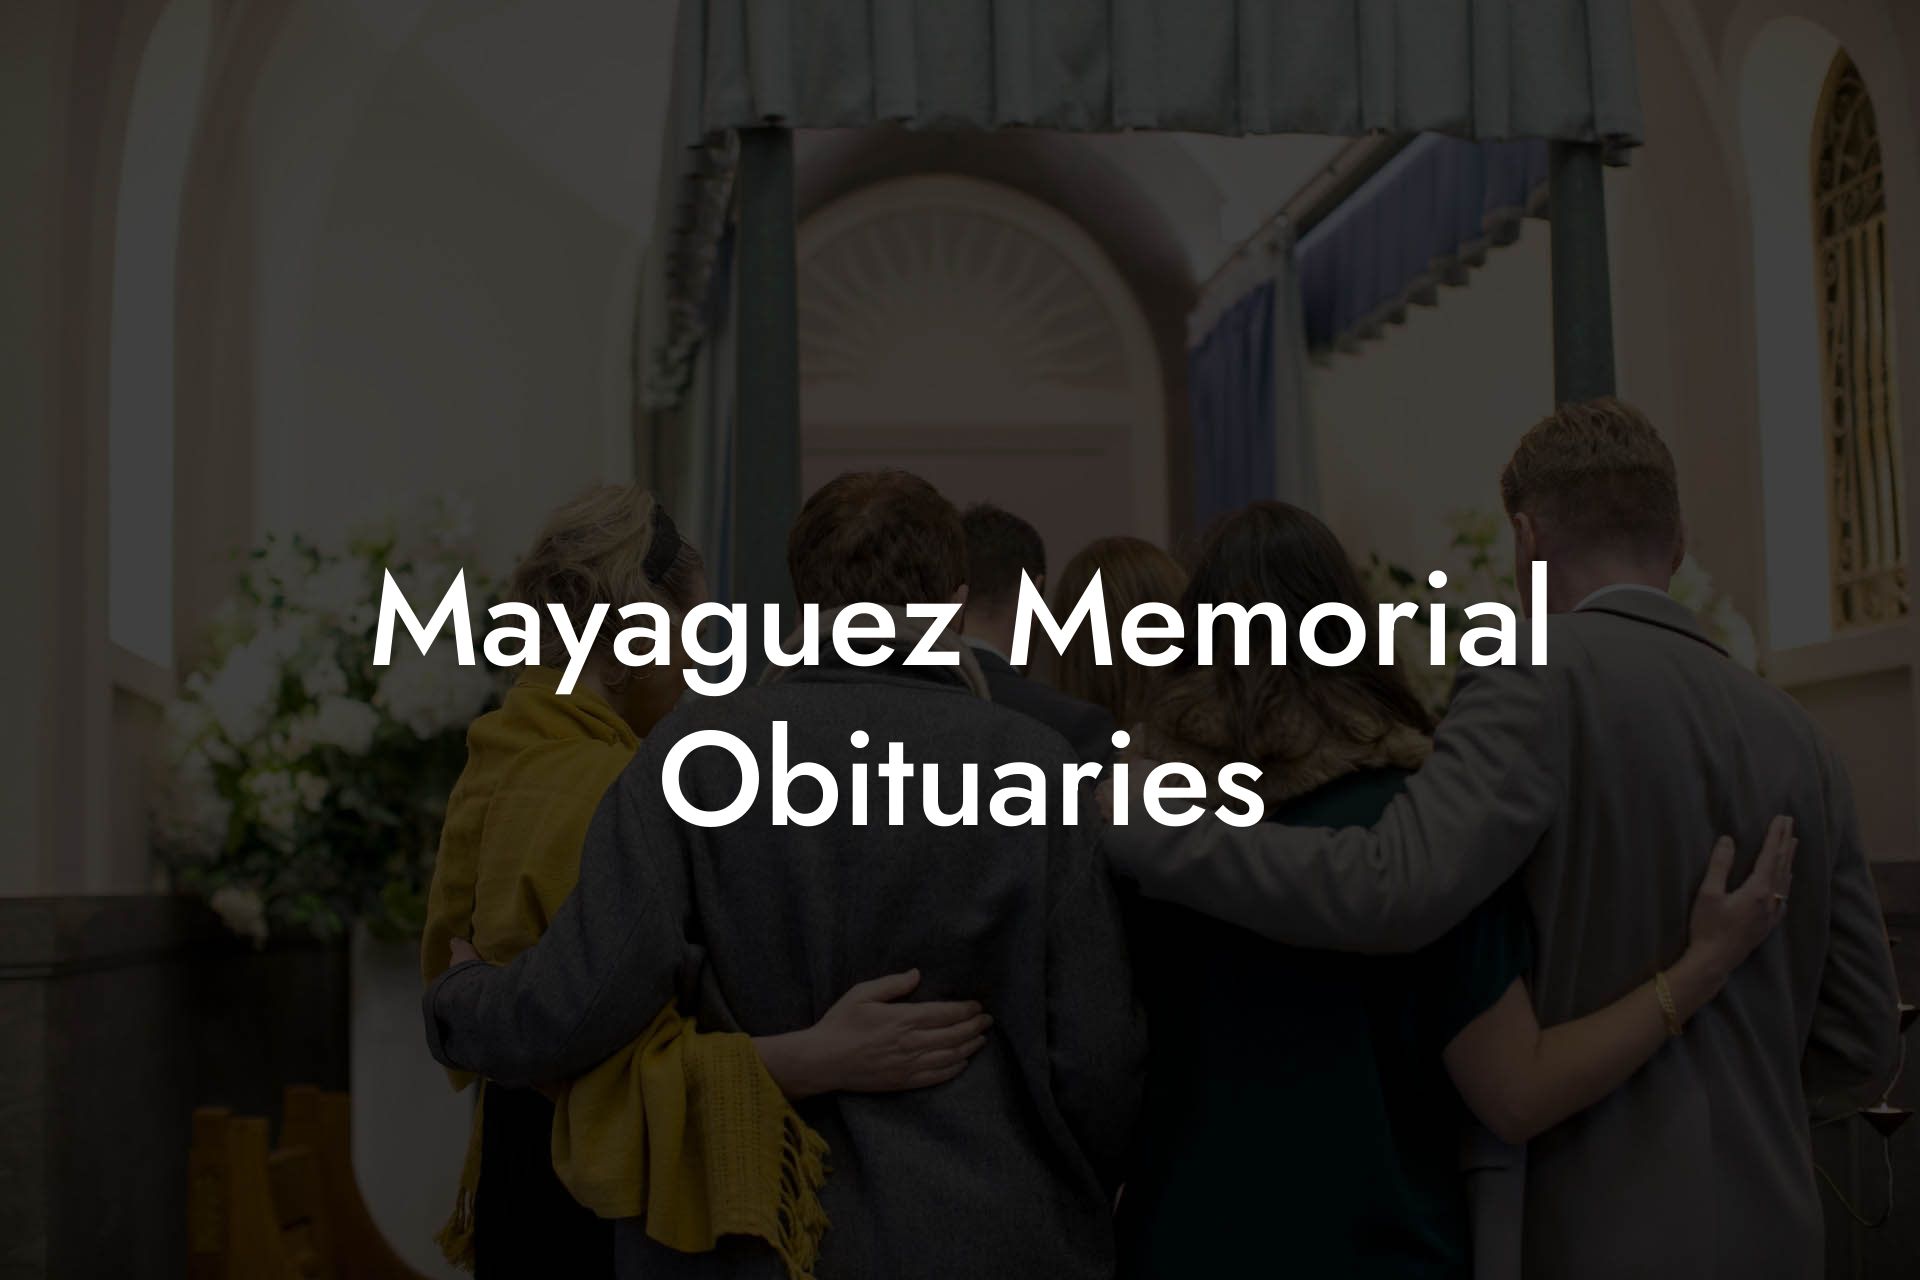 Mayaguez Memorial Obituaries